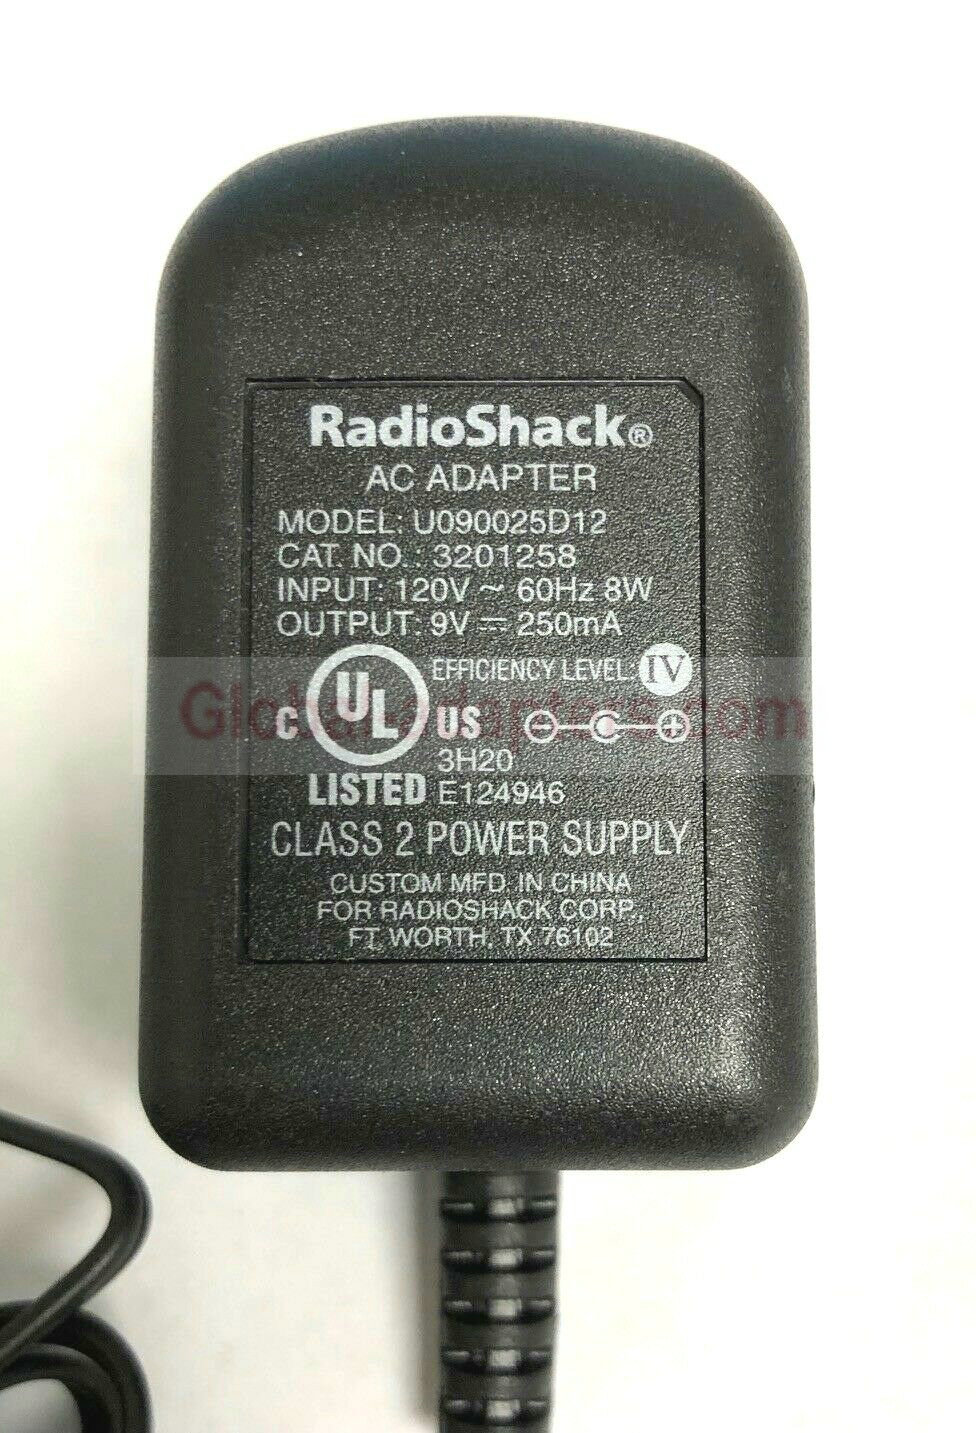 New 9V 250mA RadioShack U090025D12 3201258 Power Supply AC ADAPTER - Click Image to Close